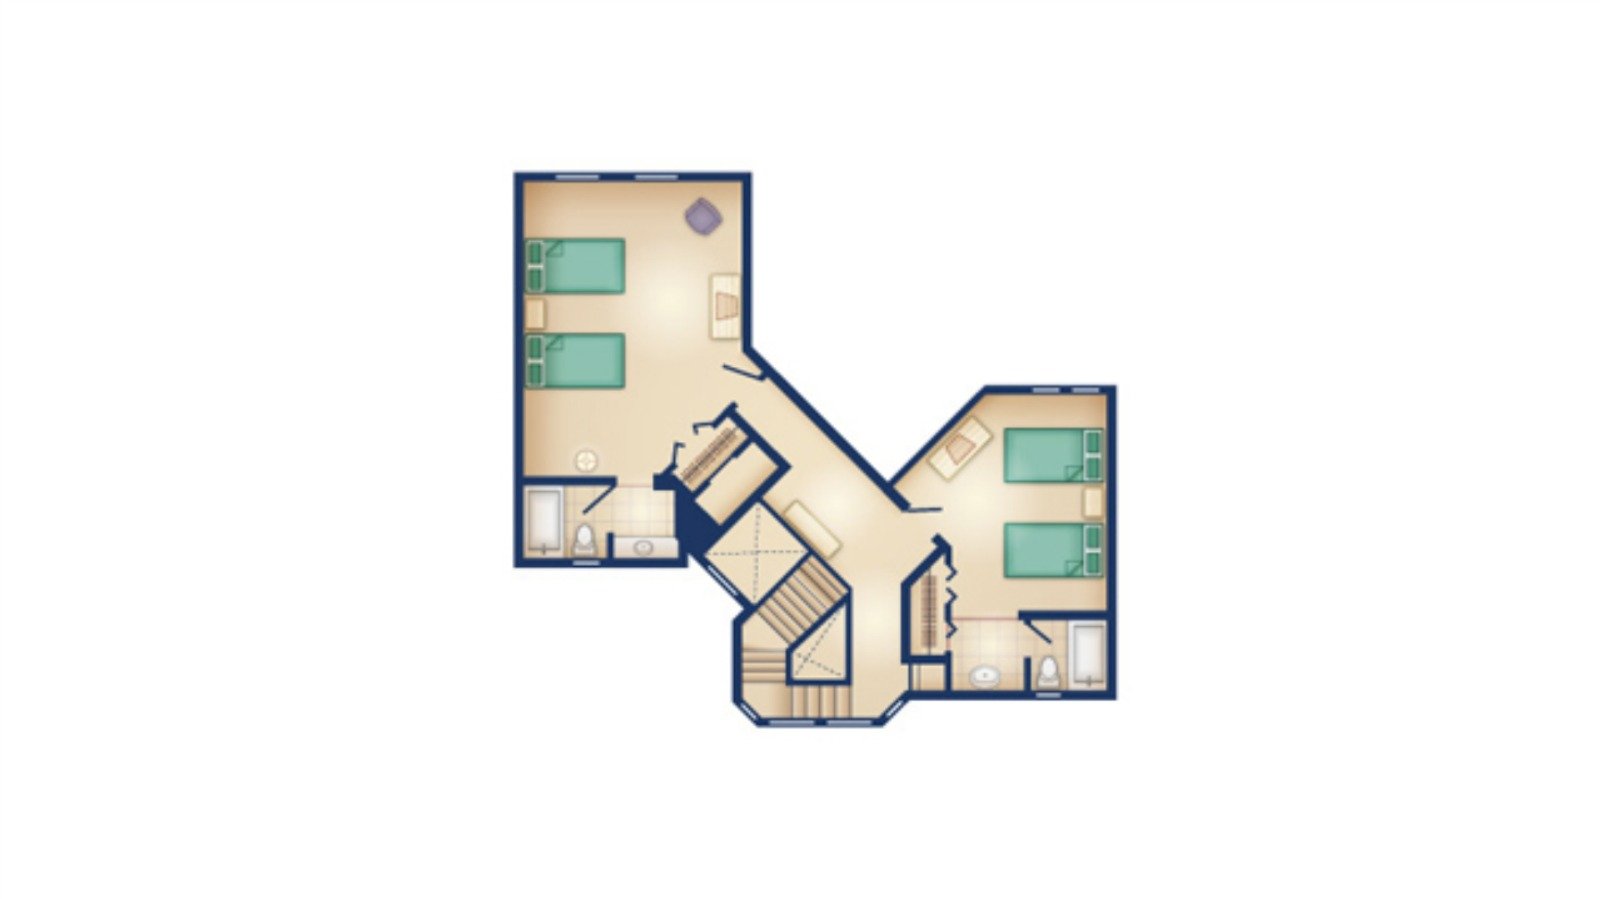 dvc-floorplan-okw-three-bedroom-second-floor.jpg